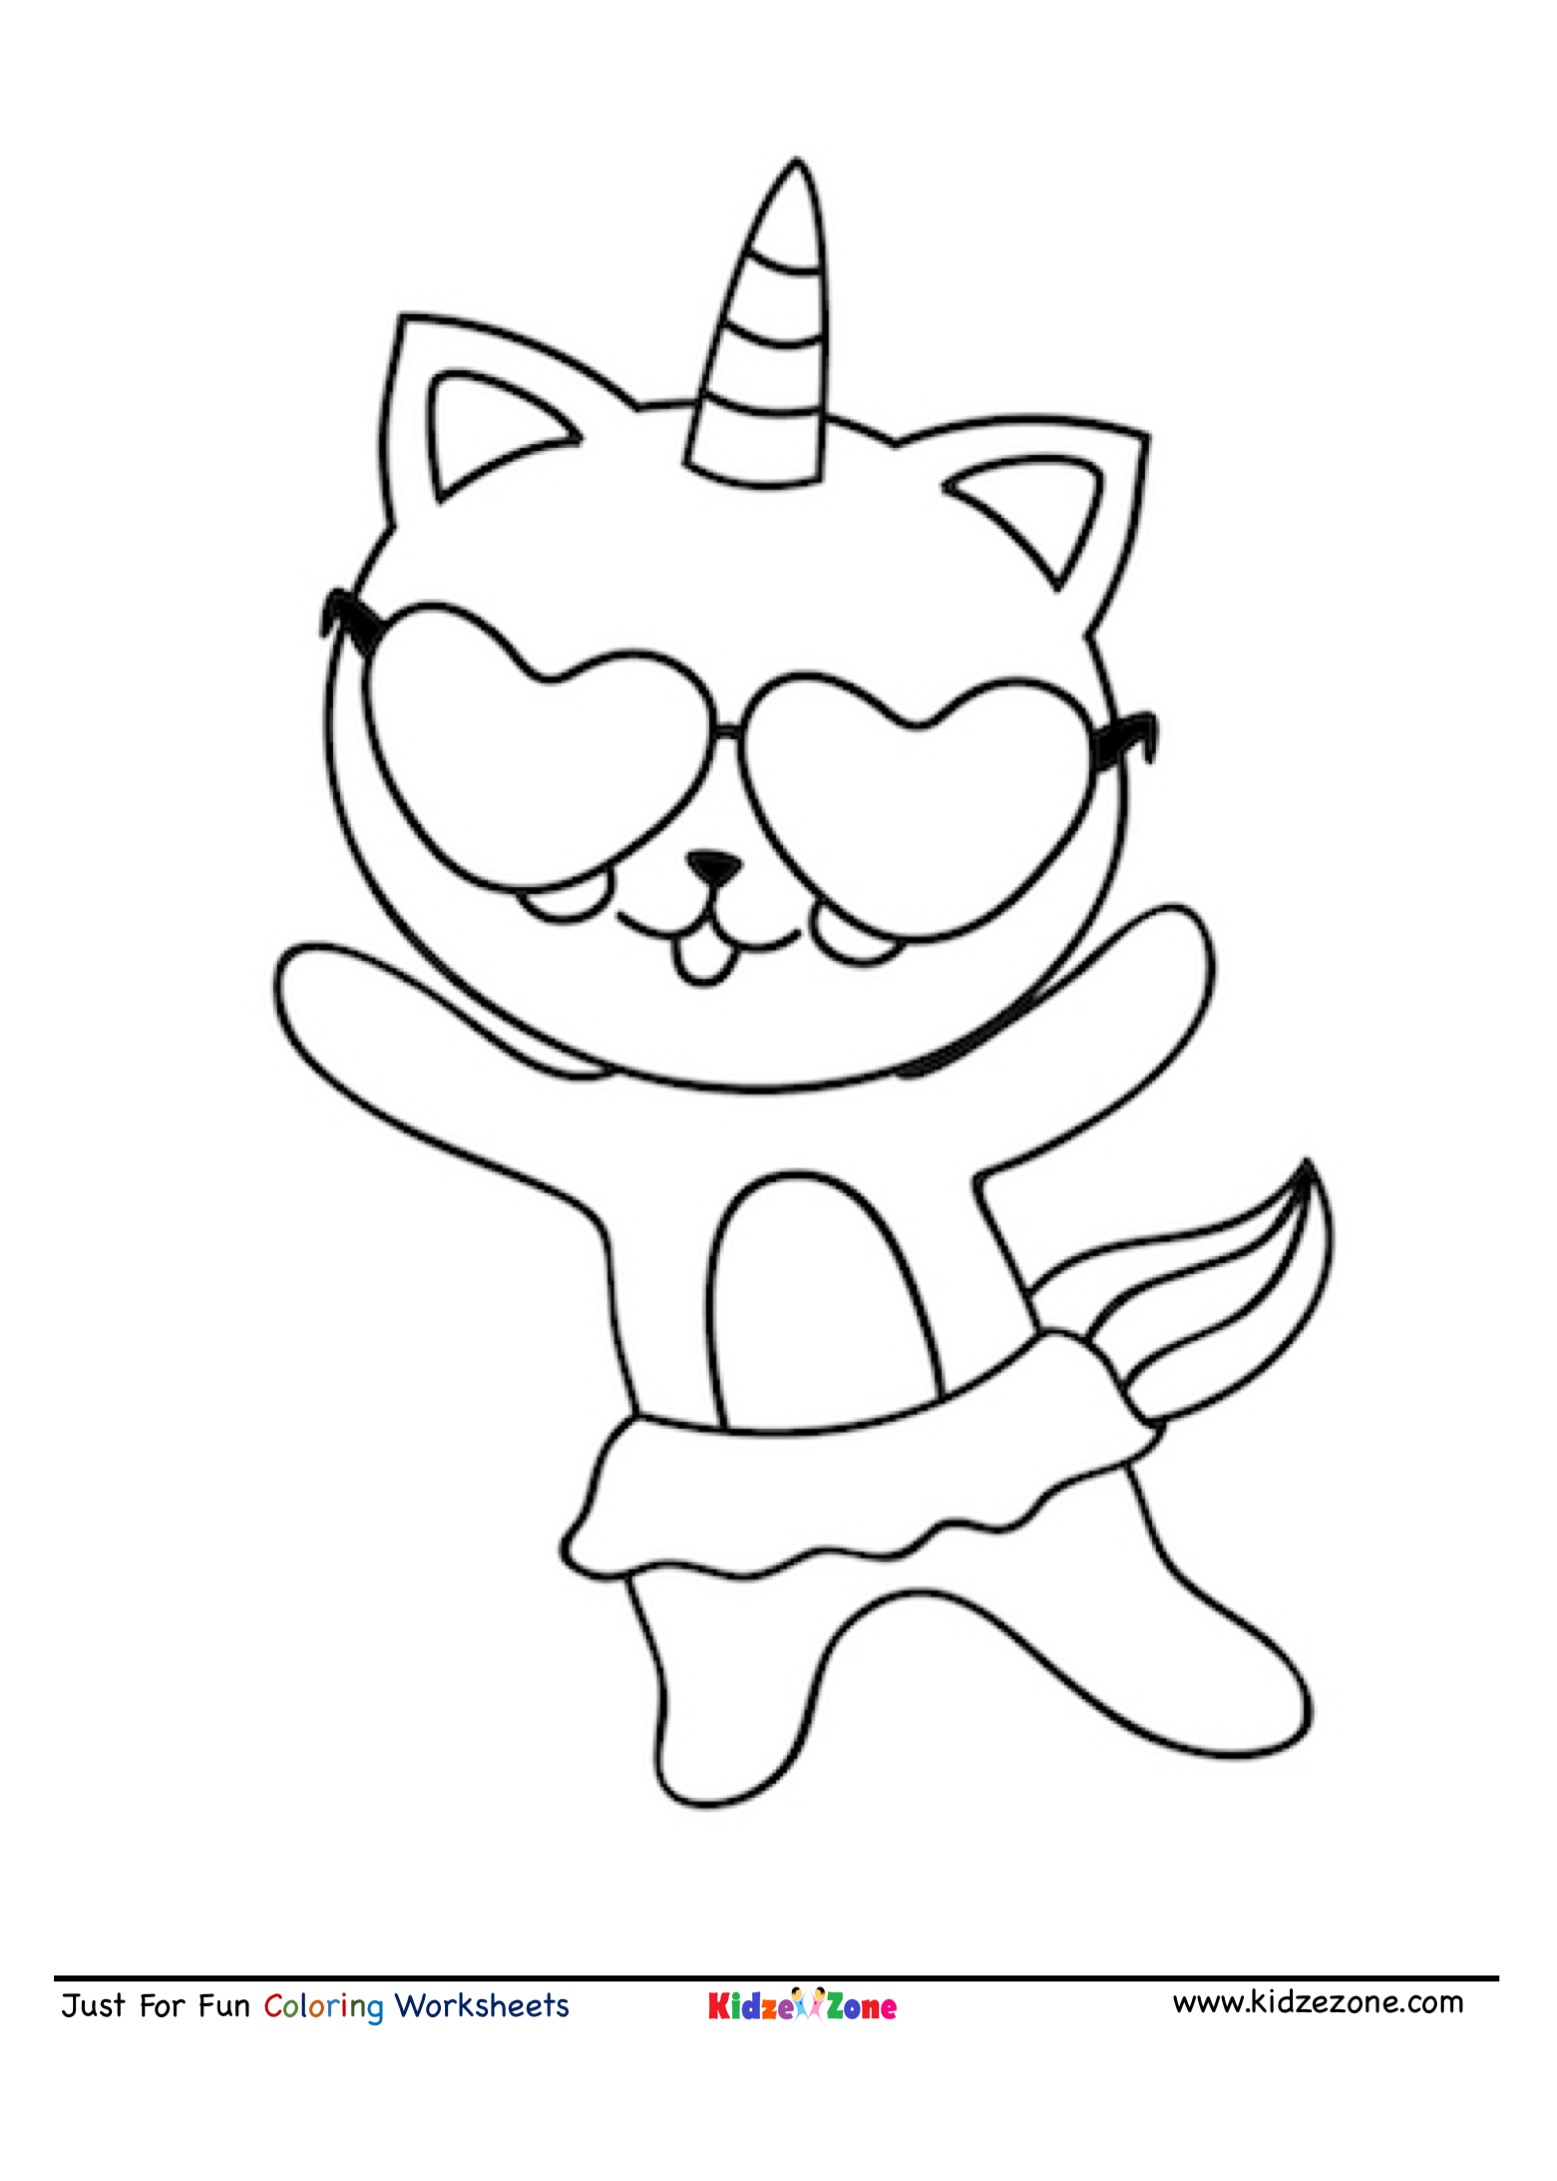 Dancing cat cartoon coloring page - KidzeZone